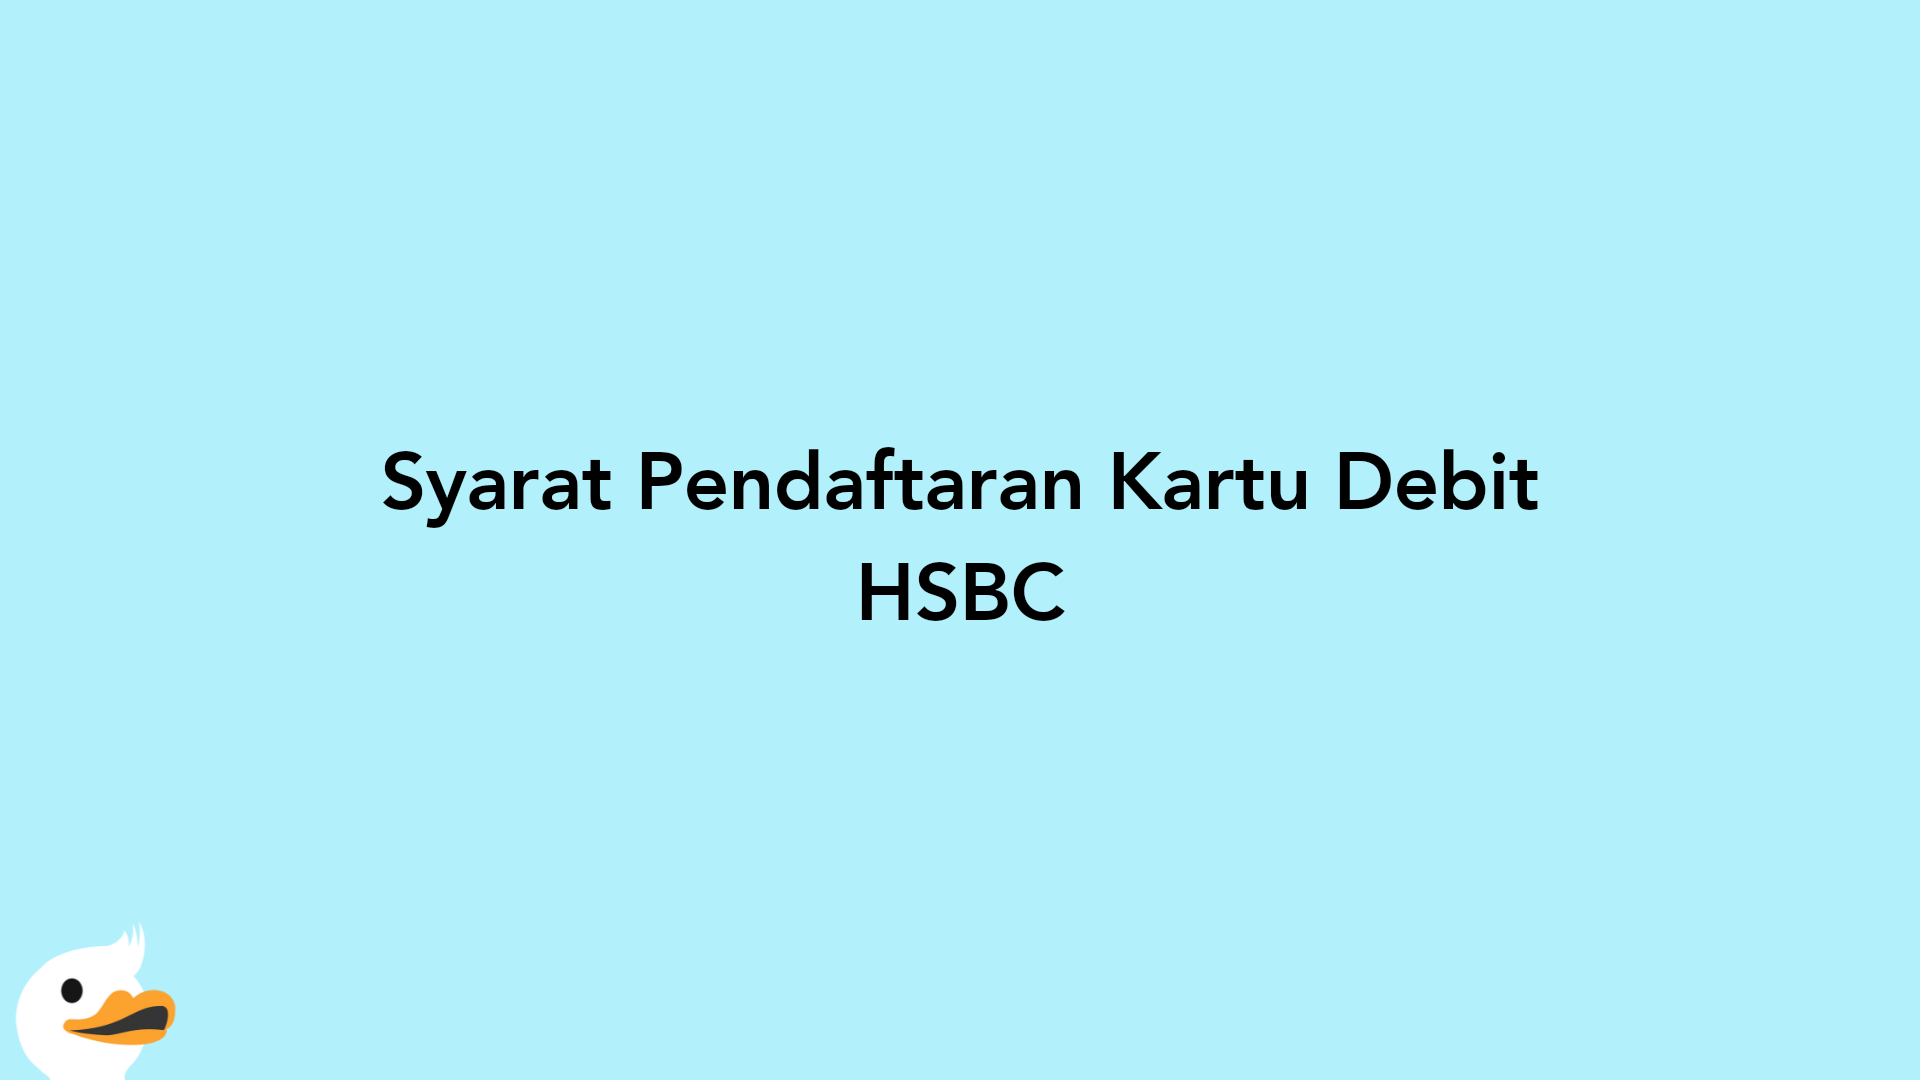 Syarat Pendaftaran Kartu Debit HSBC